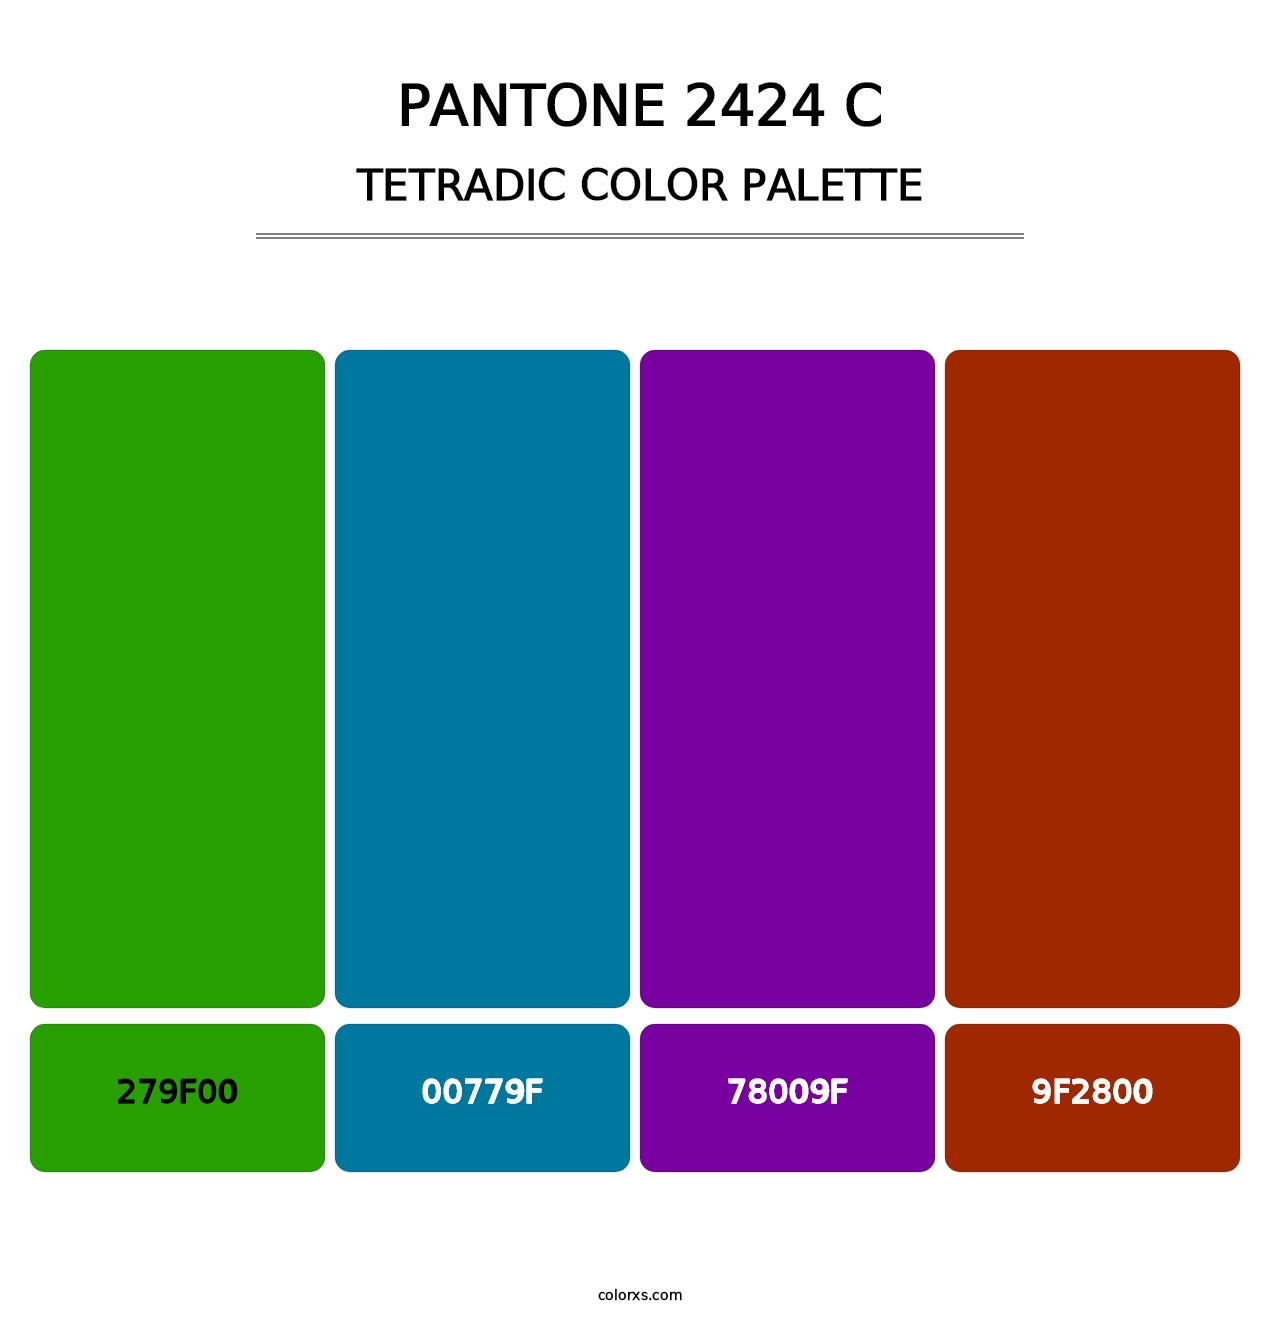 PANTONE 2424 C - Tetradic Color Palette